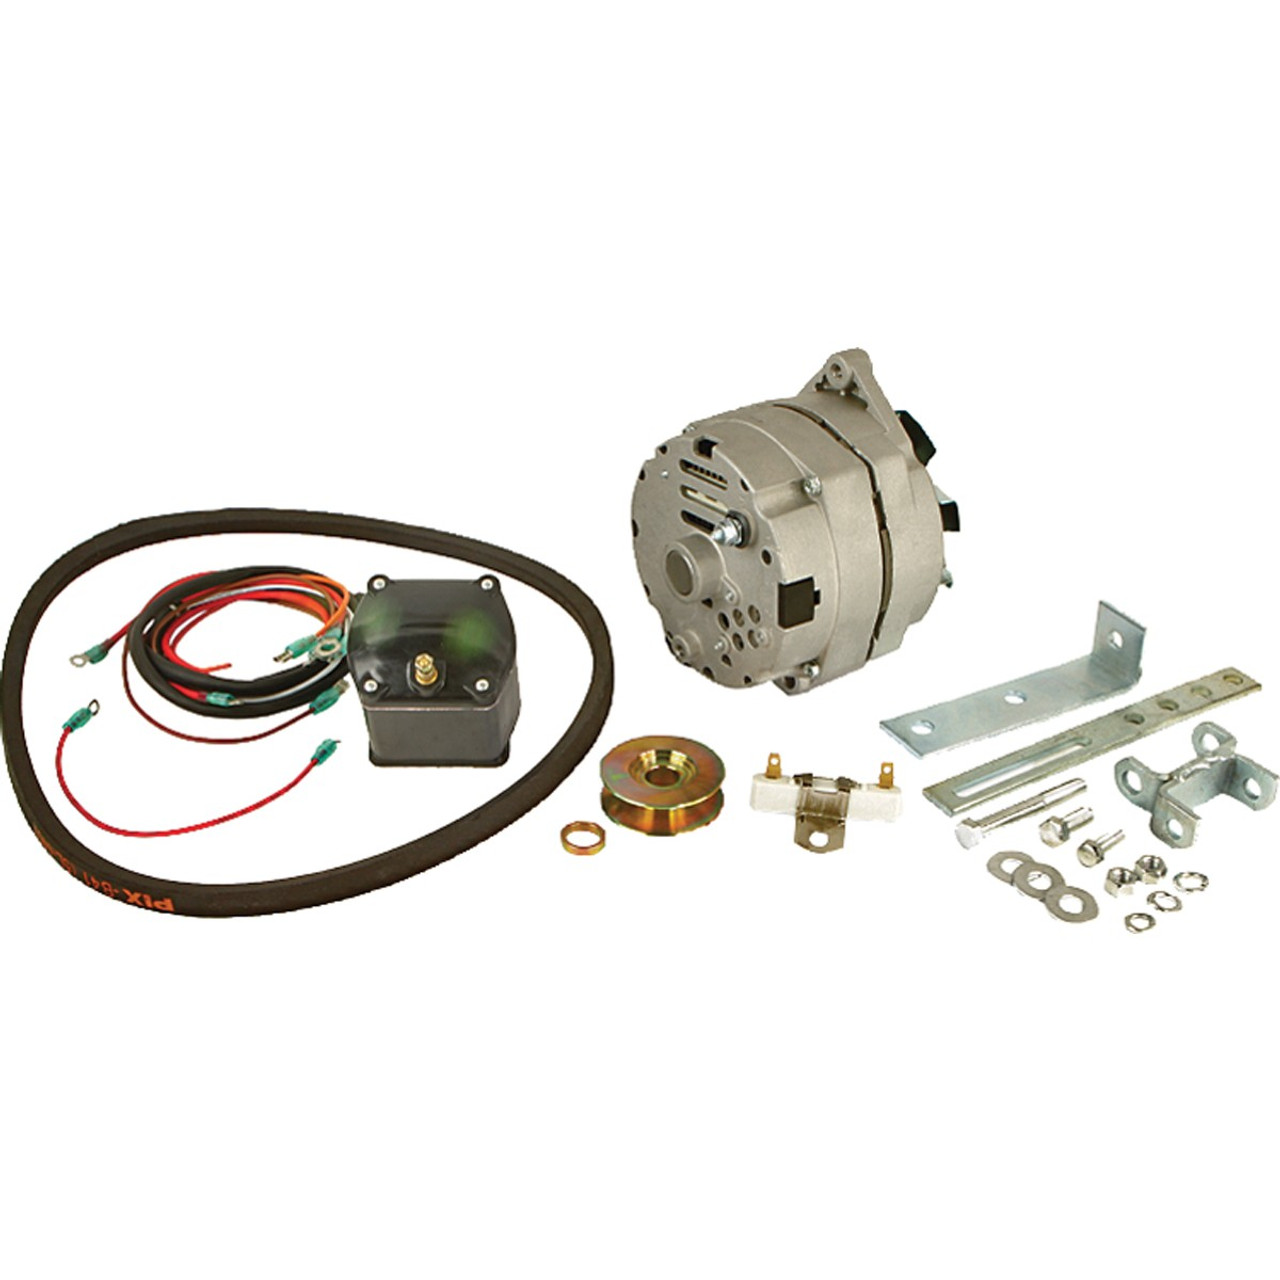 Alternator Conversion Kit For Ford 2n 1100 0530 1100 0530bk1 400 Db Electrical